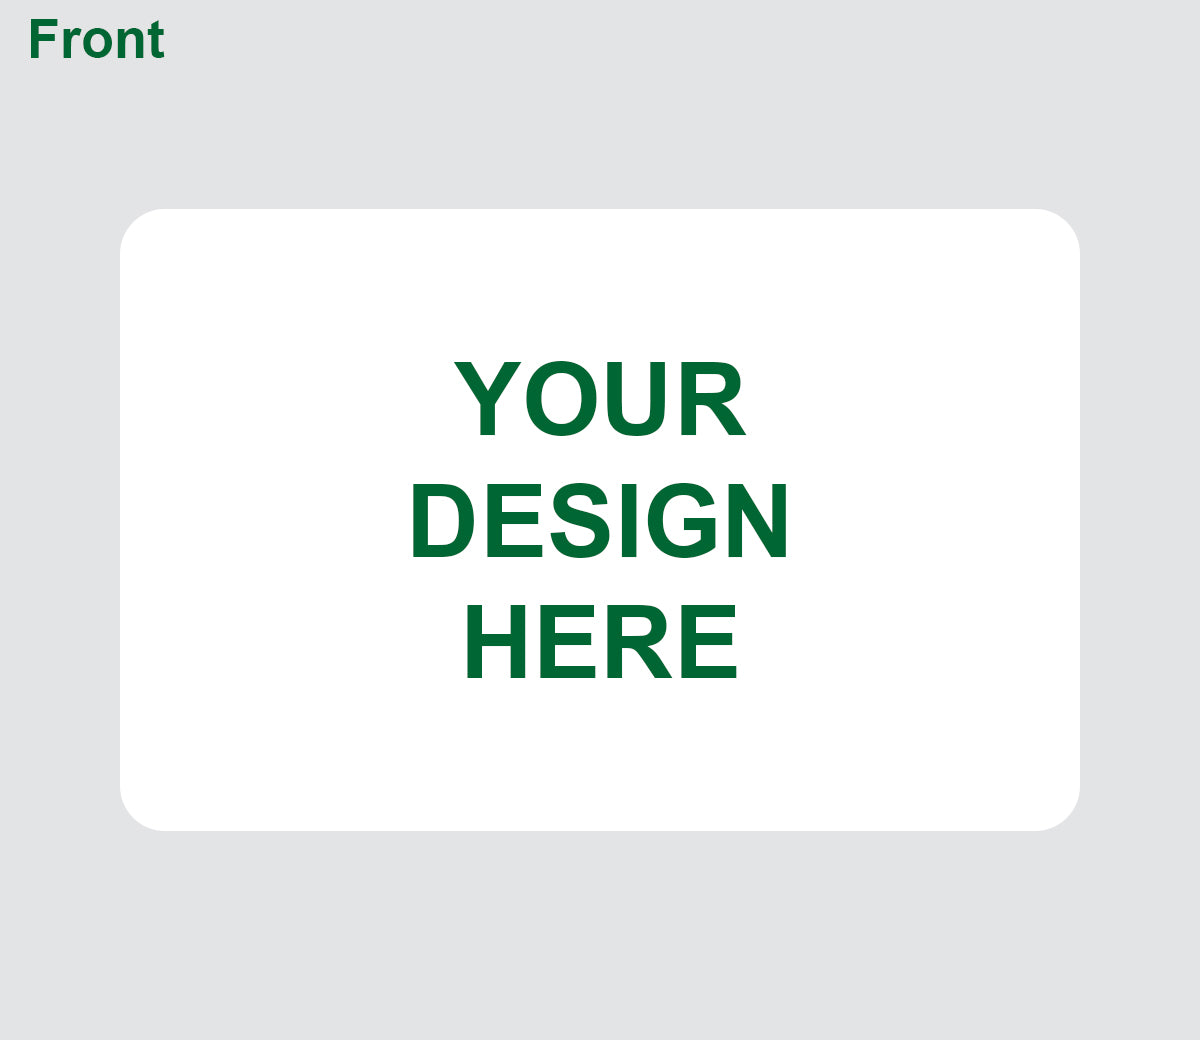 Business Cards - Custom Design